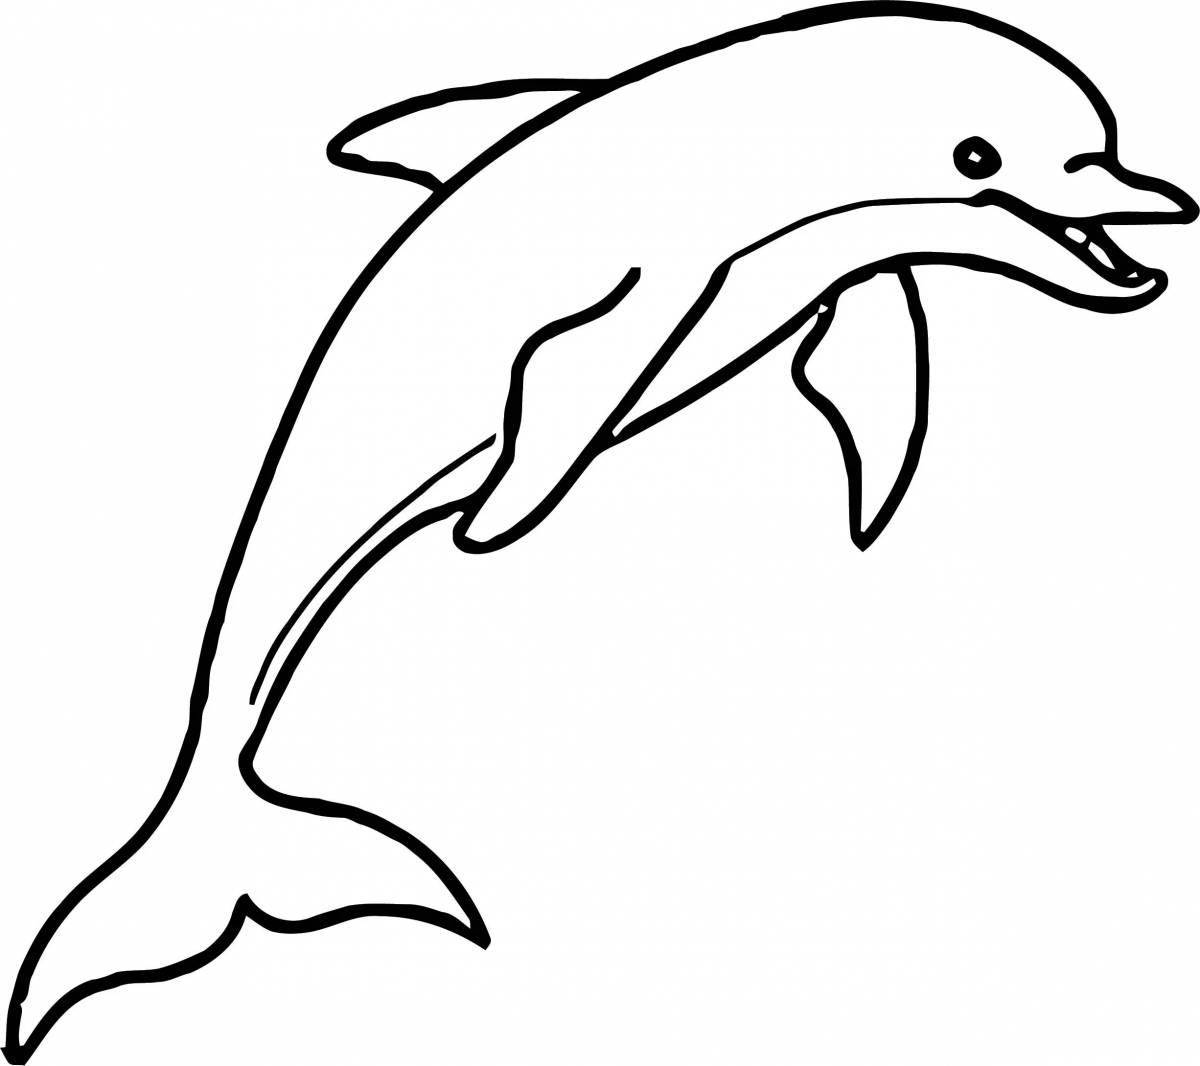 Coloring book shiny black sea bottlenose dolphin